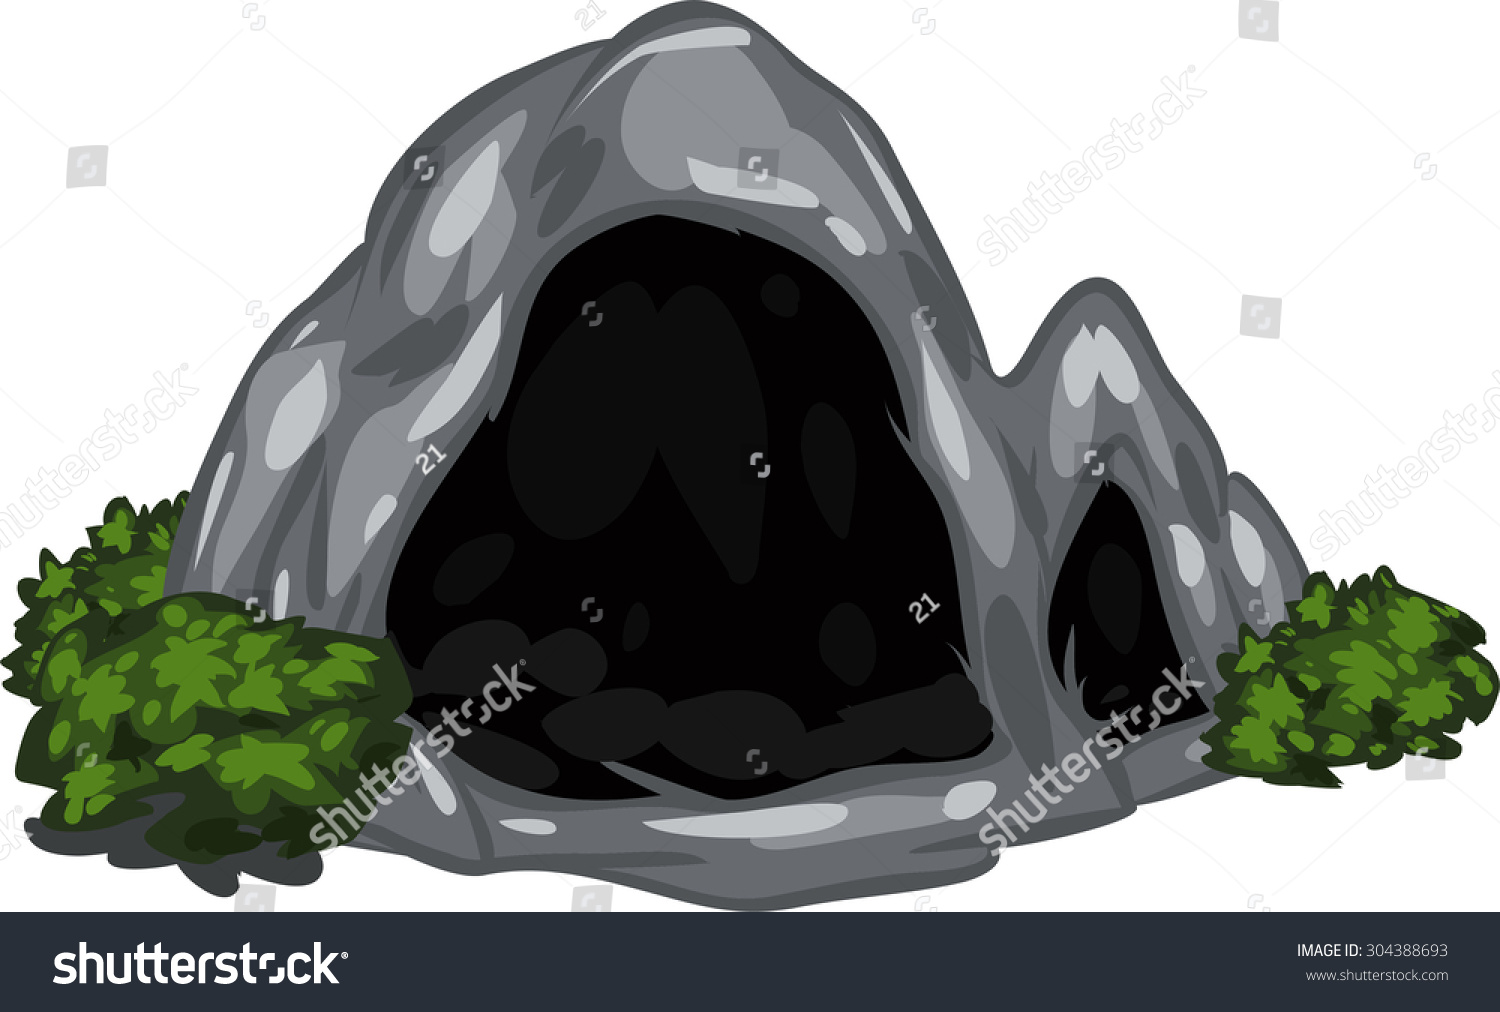 Illustration Cave - 304388693 : Shutterstock